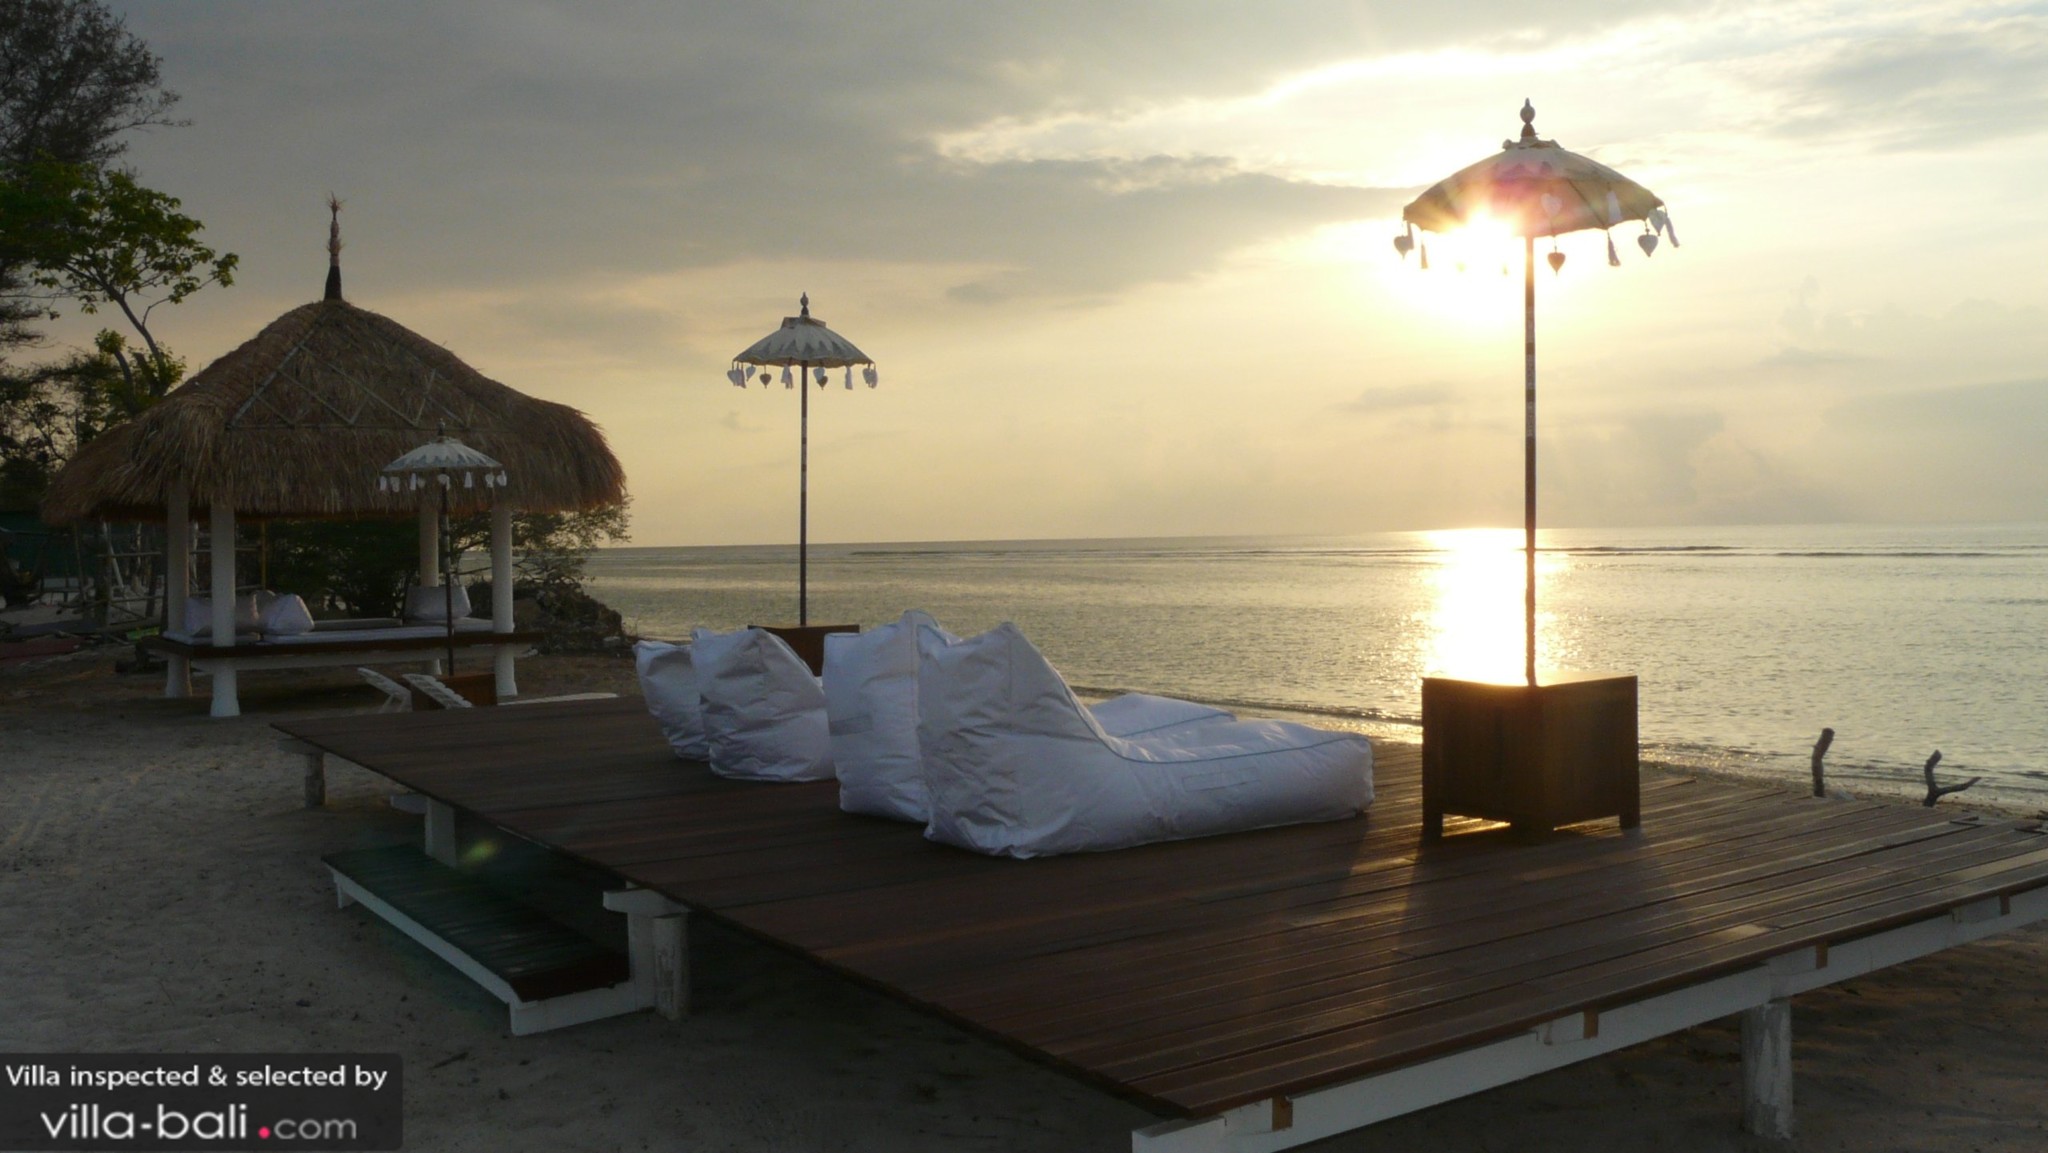 Best Price on Villa Gili Bali Beach in Gili islands, Bali (5 bedrooms